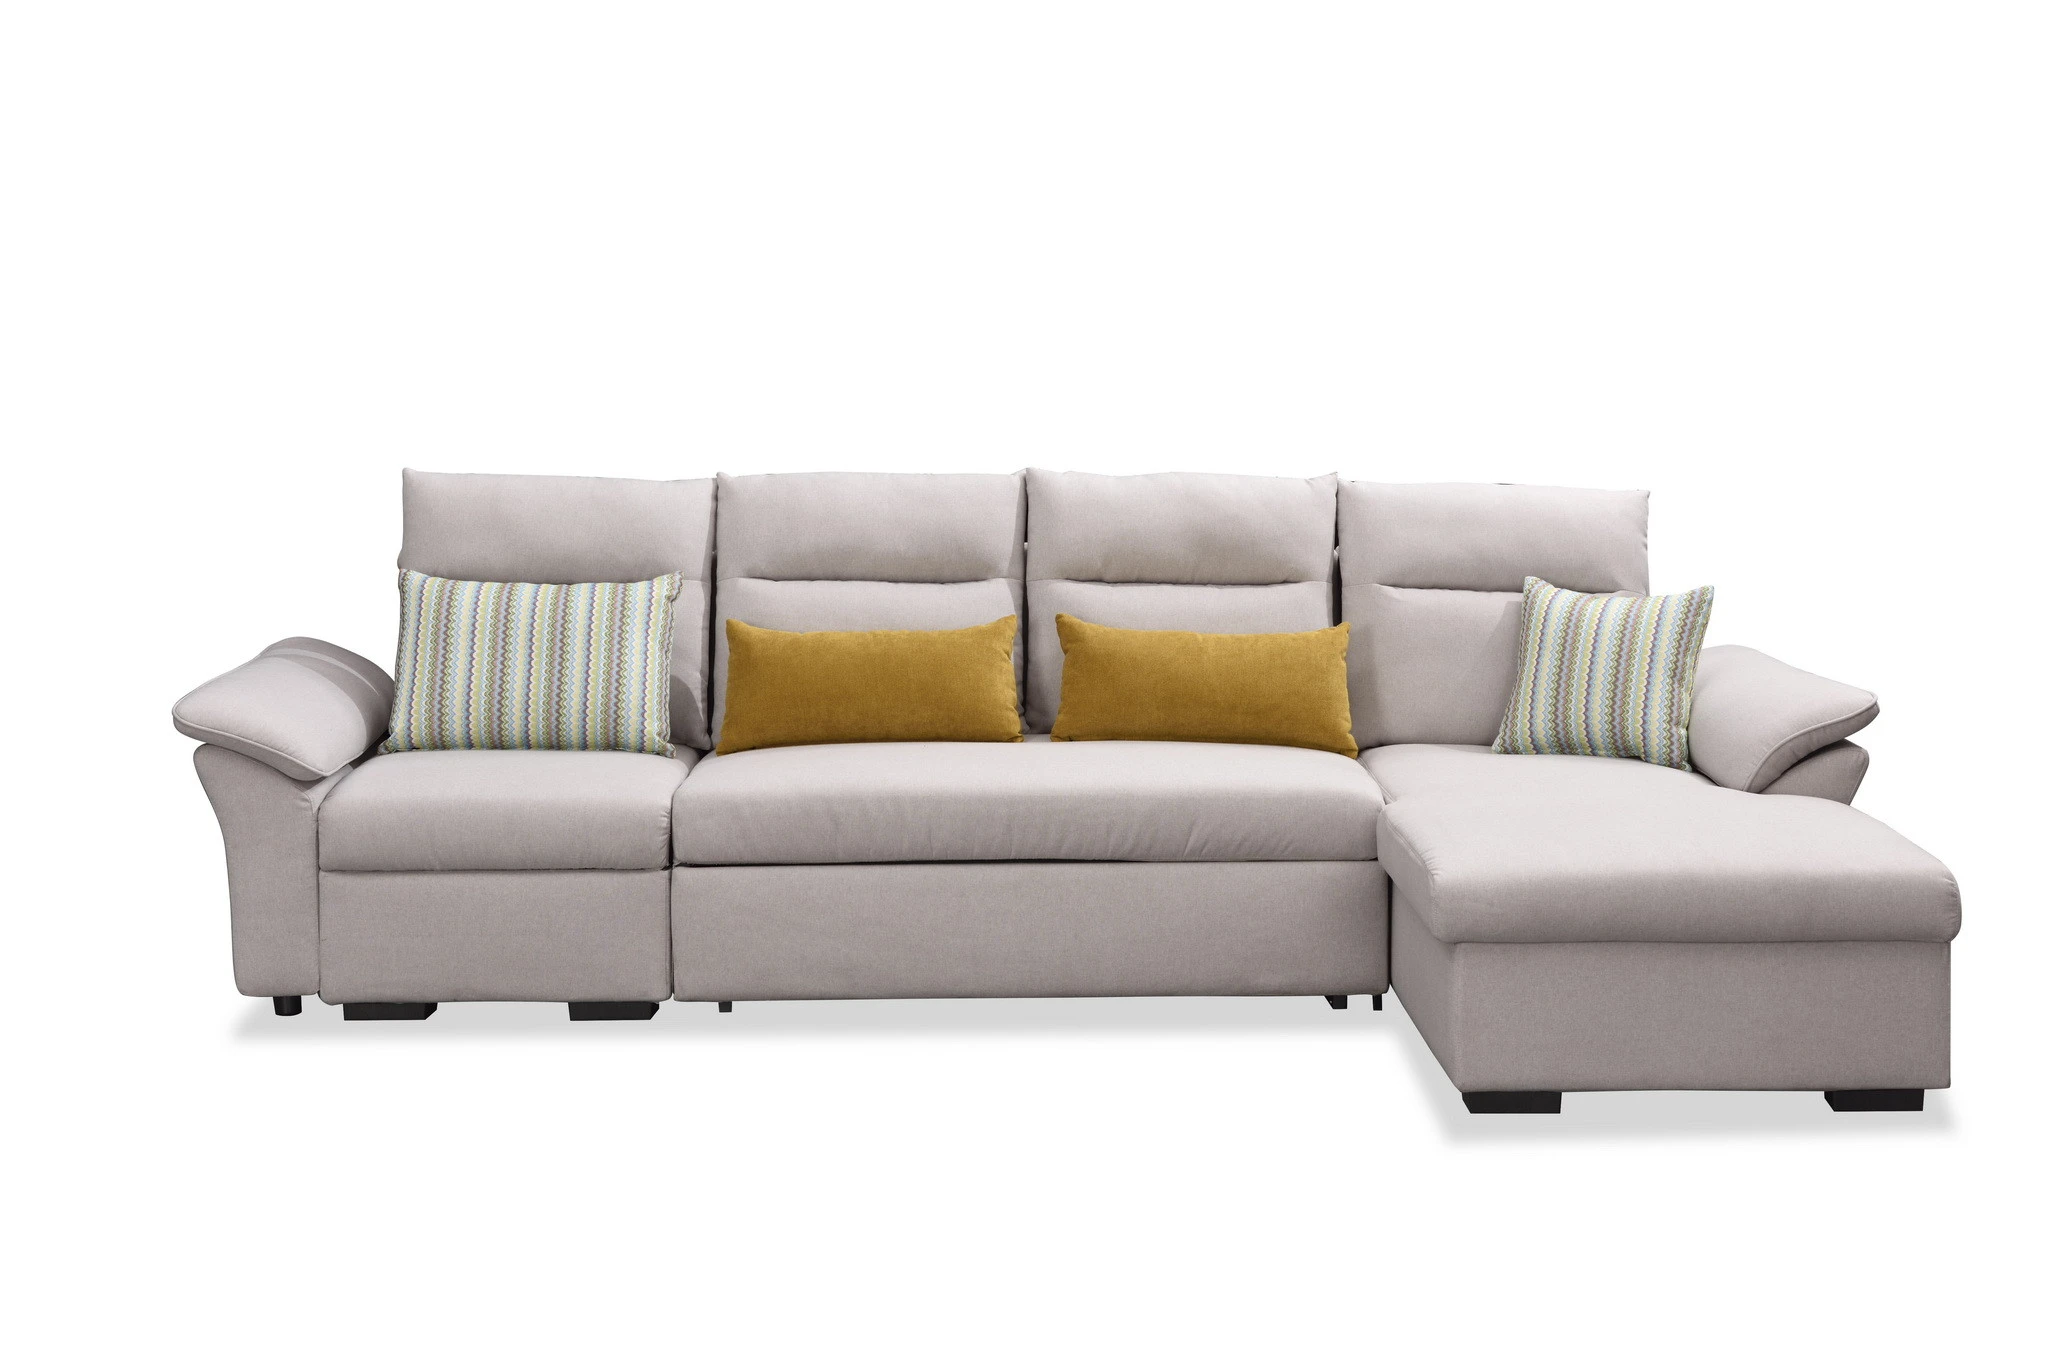 High End Modern European Fabric Leisure Couch L Shape Sofa Living Room Furniture